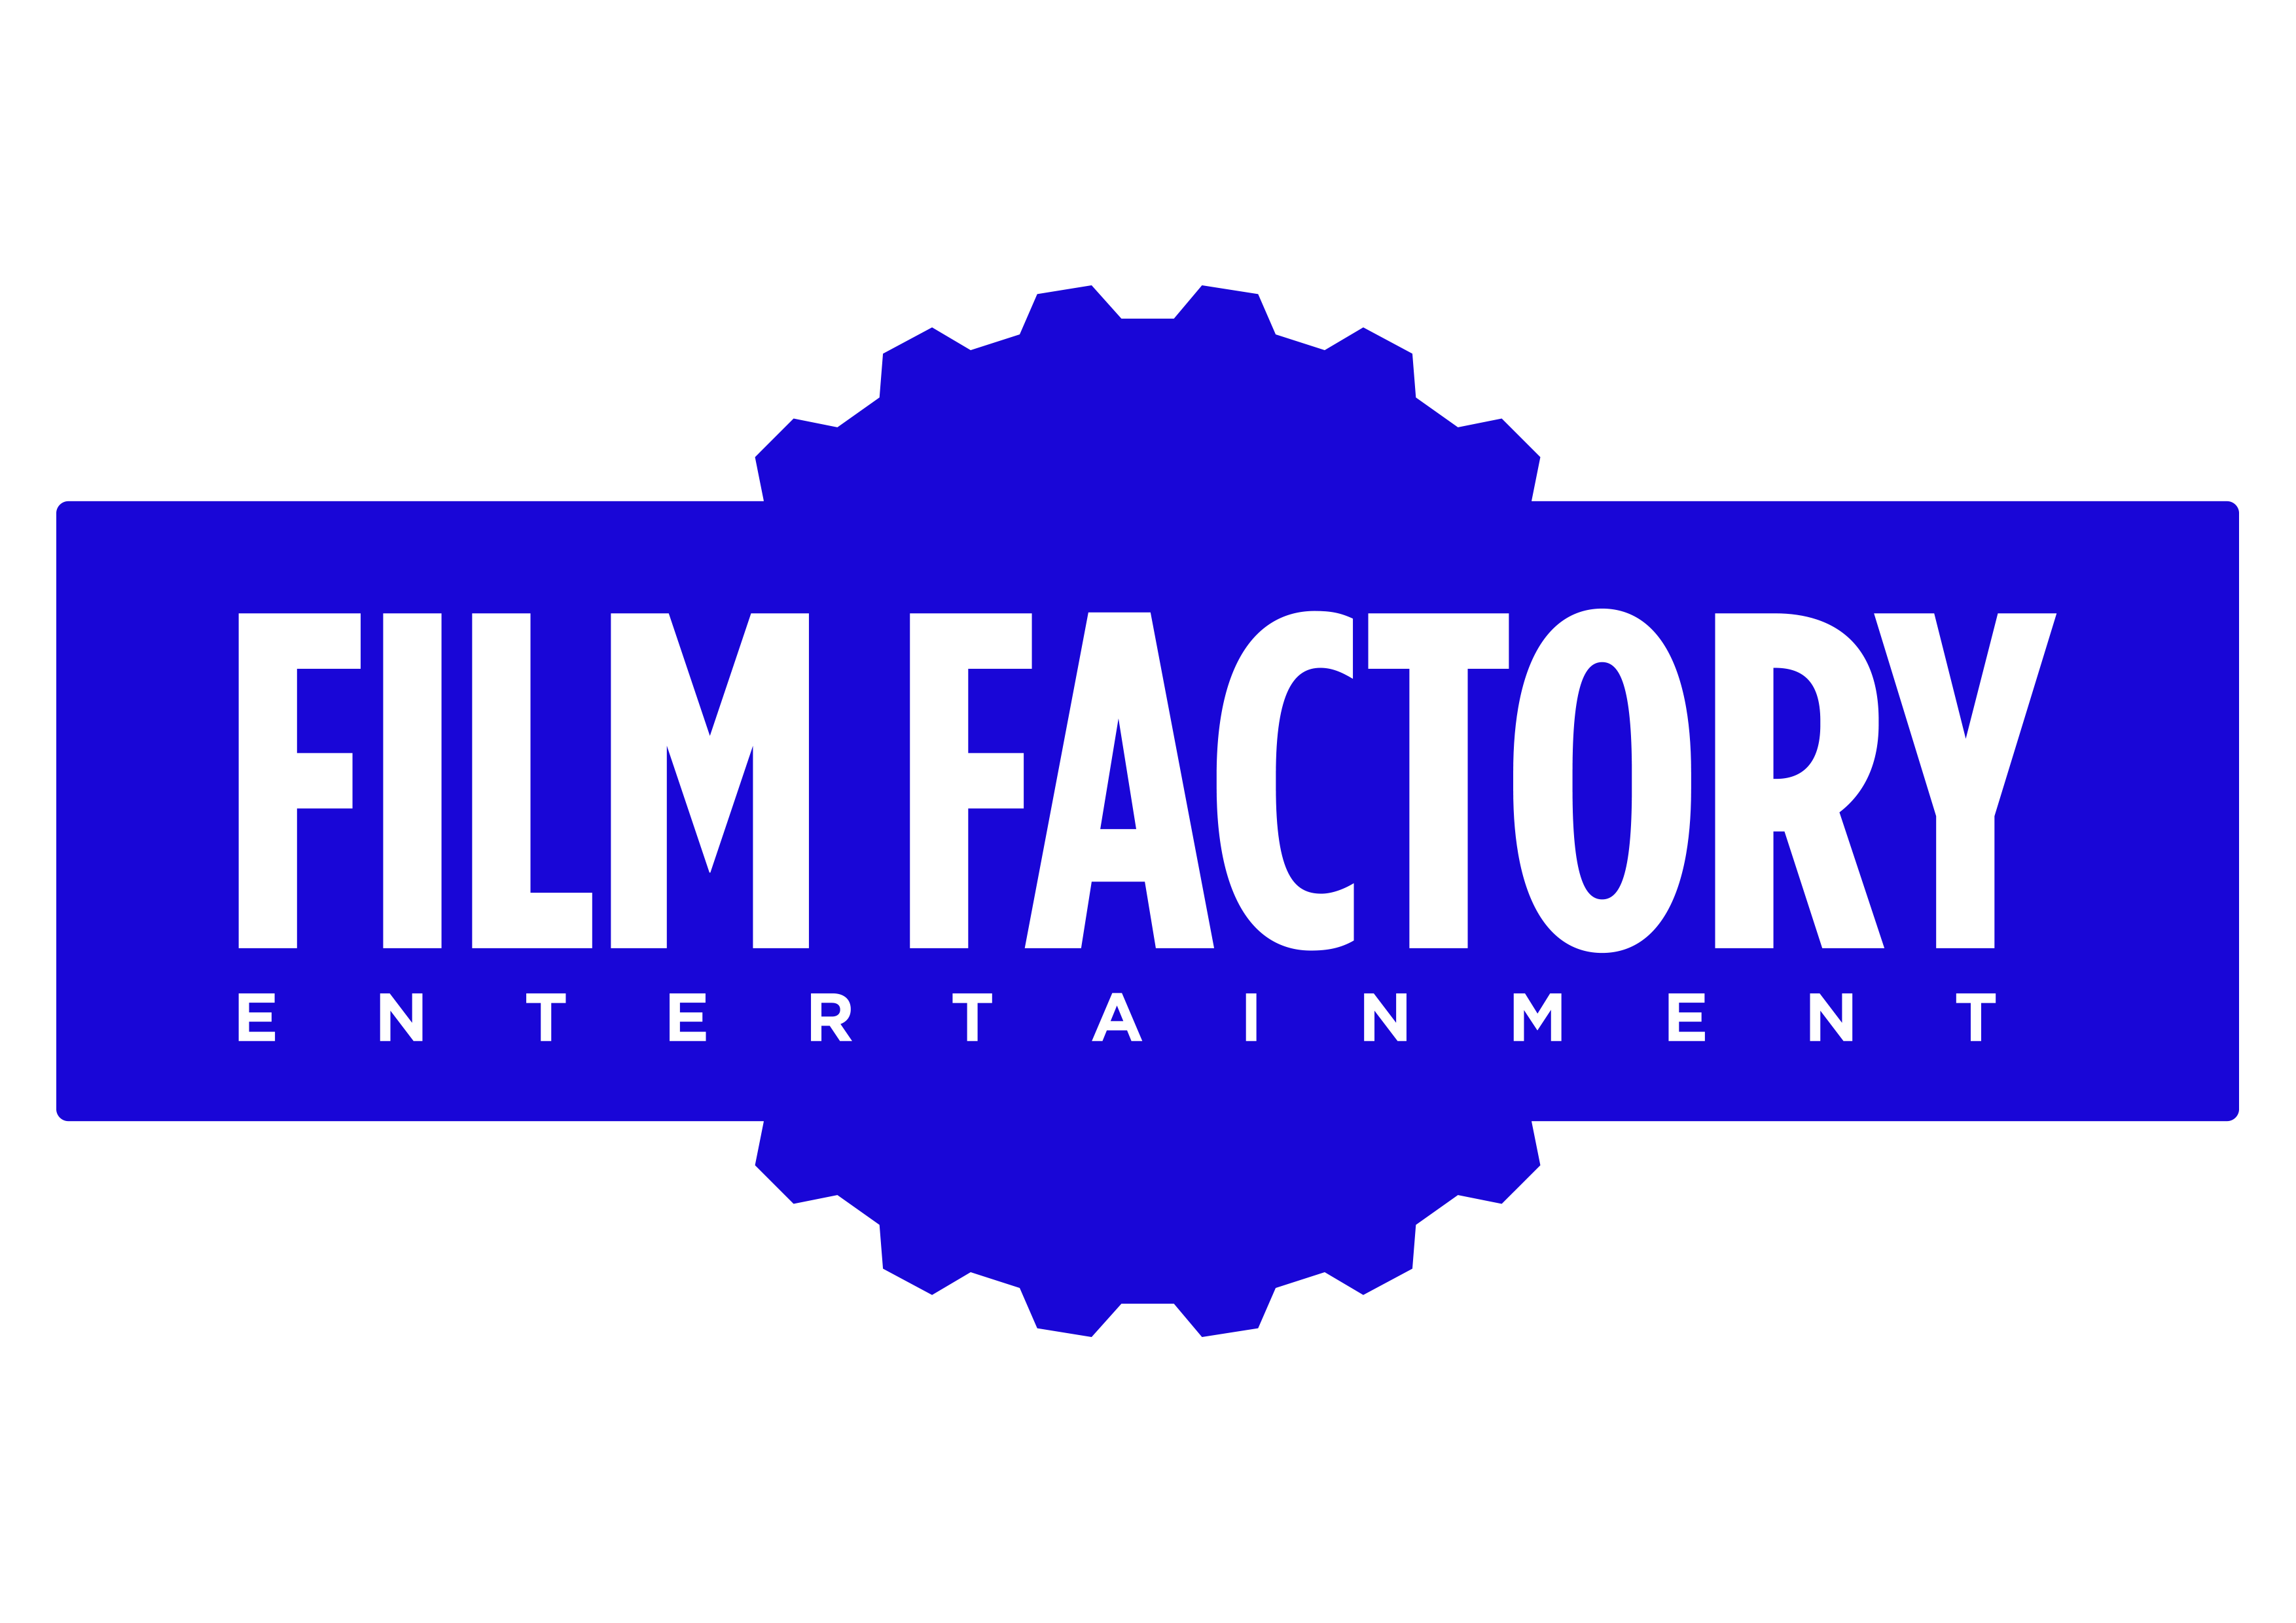 Film Factory Entertainment